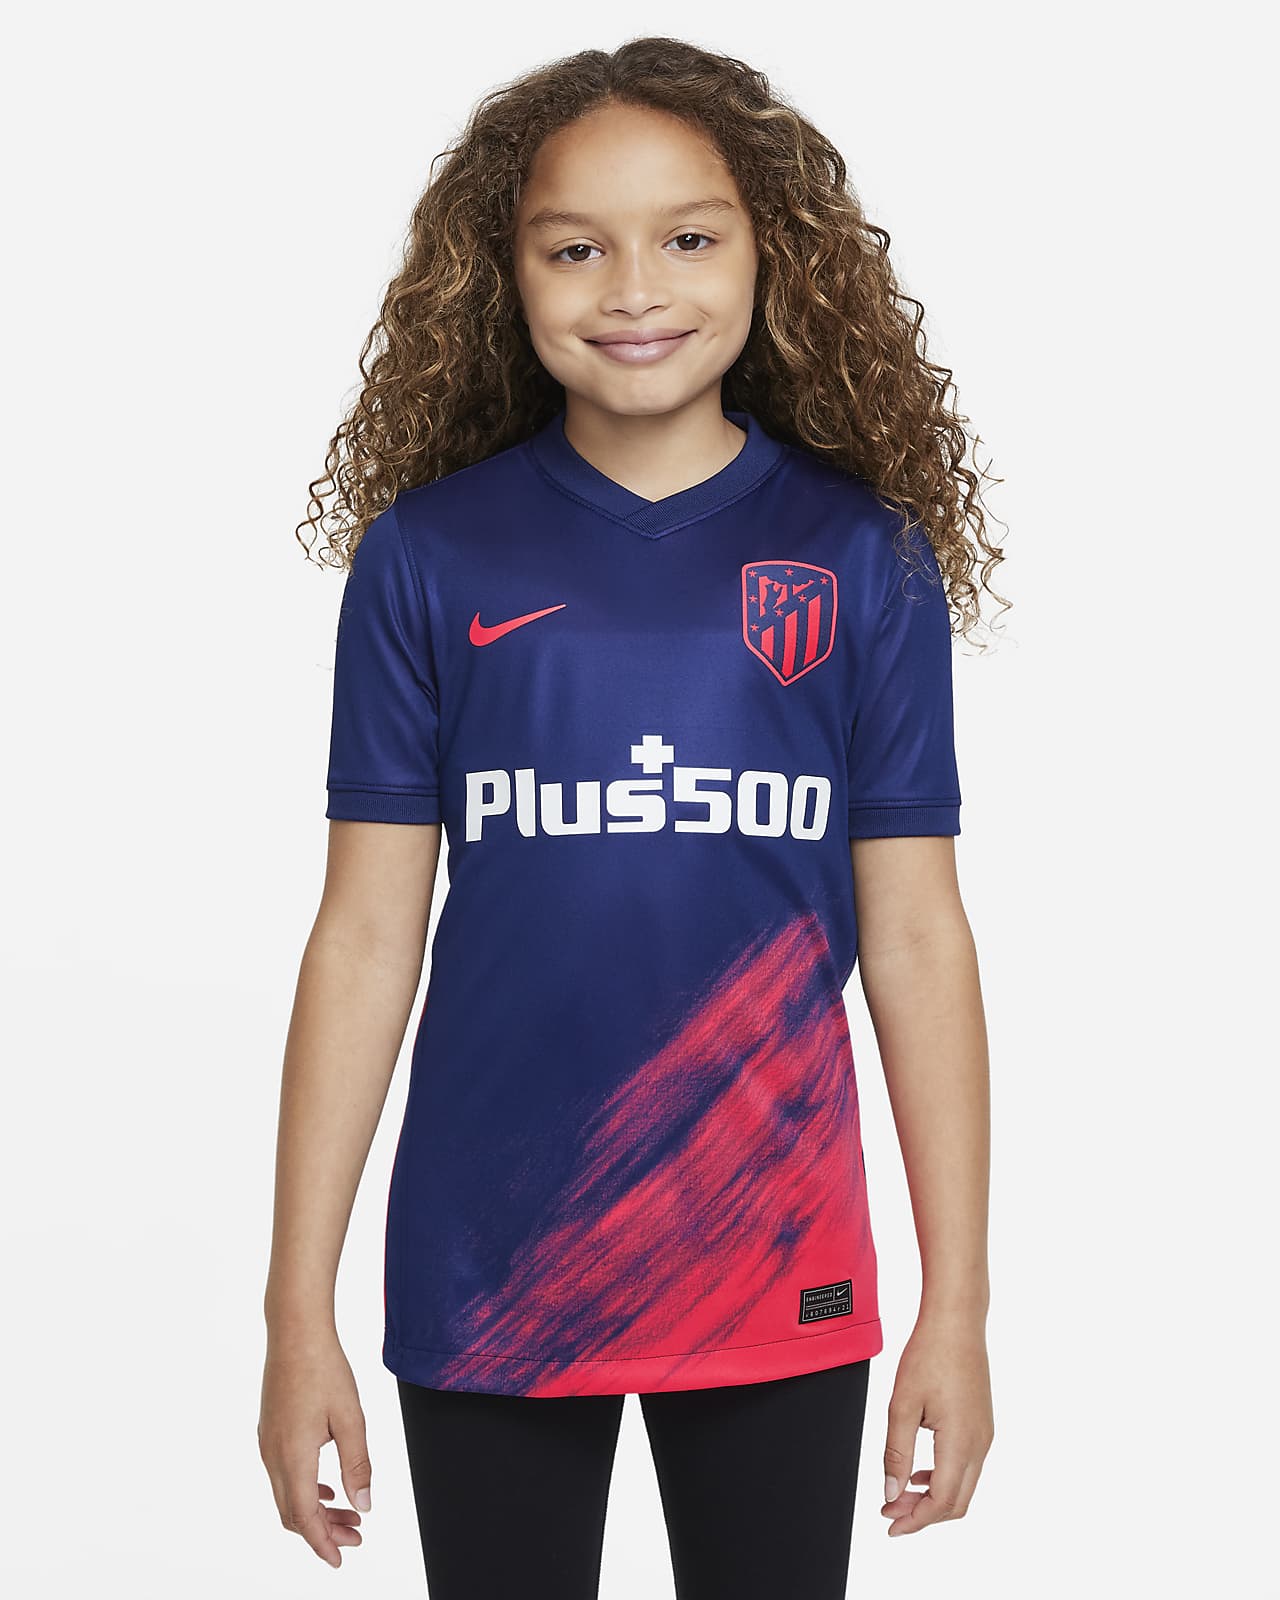 Atlético Madrid 2021/22 Stadium Away Older Kids' Football Shirt